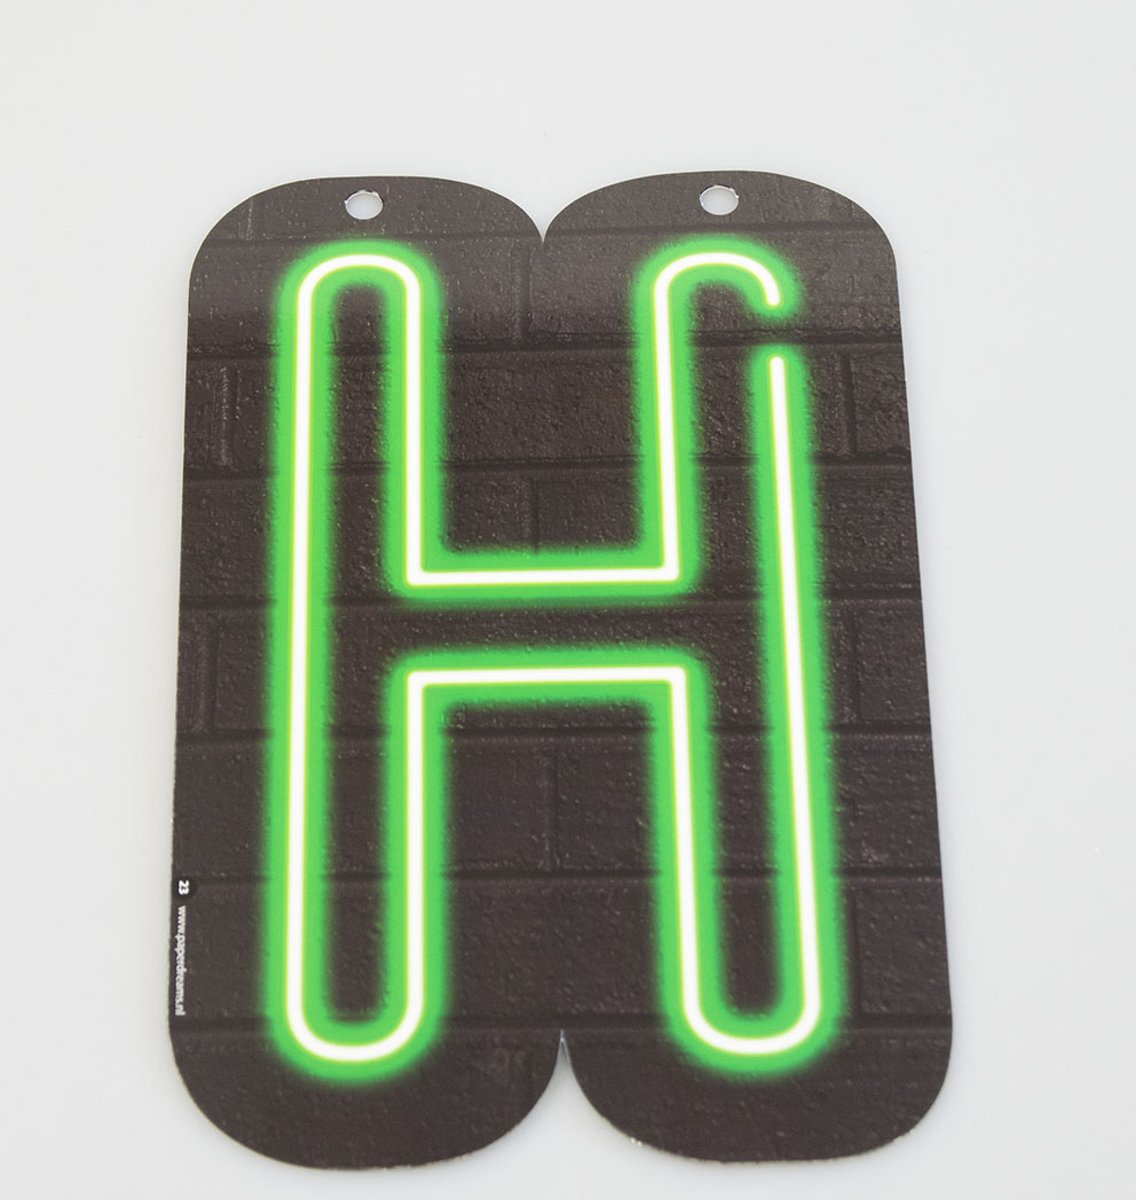 Neon letter - H